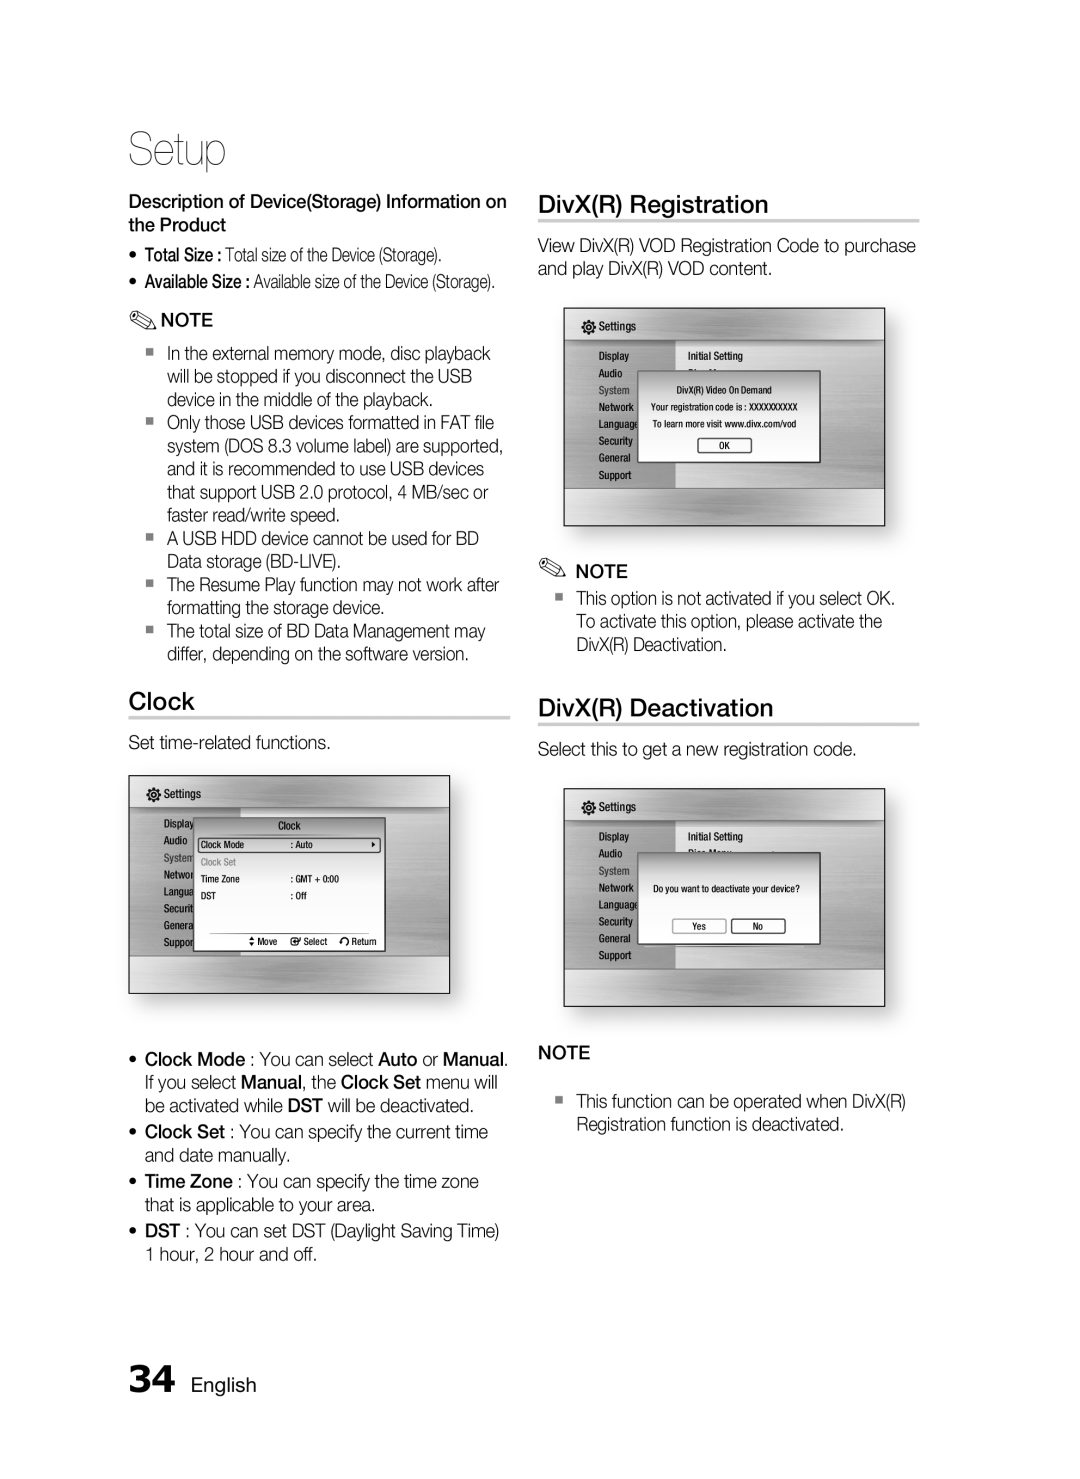 Samsung HT-C5200 user manual DivXR Registration, Clock, DivXR Deactivation, English, Setup 